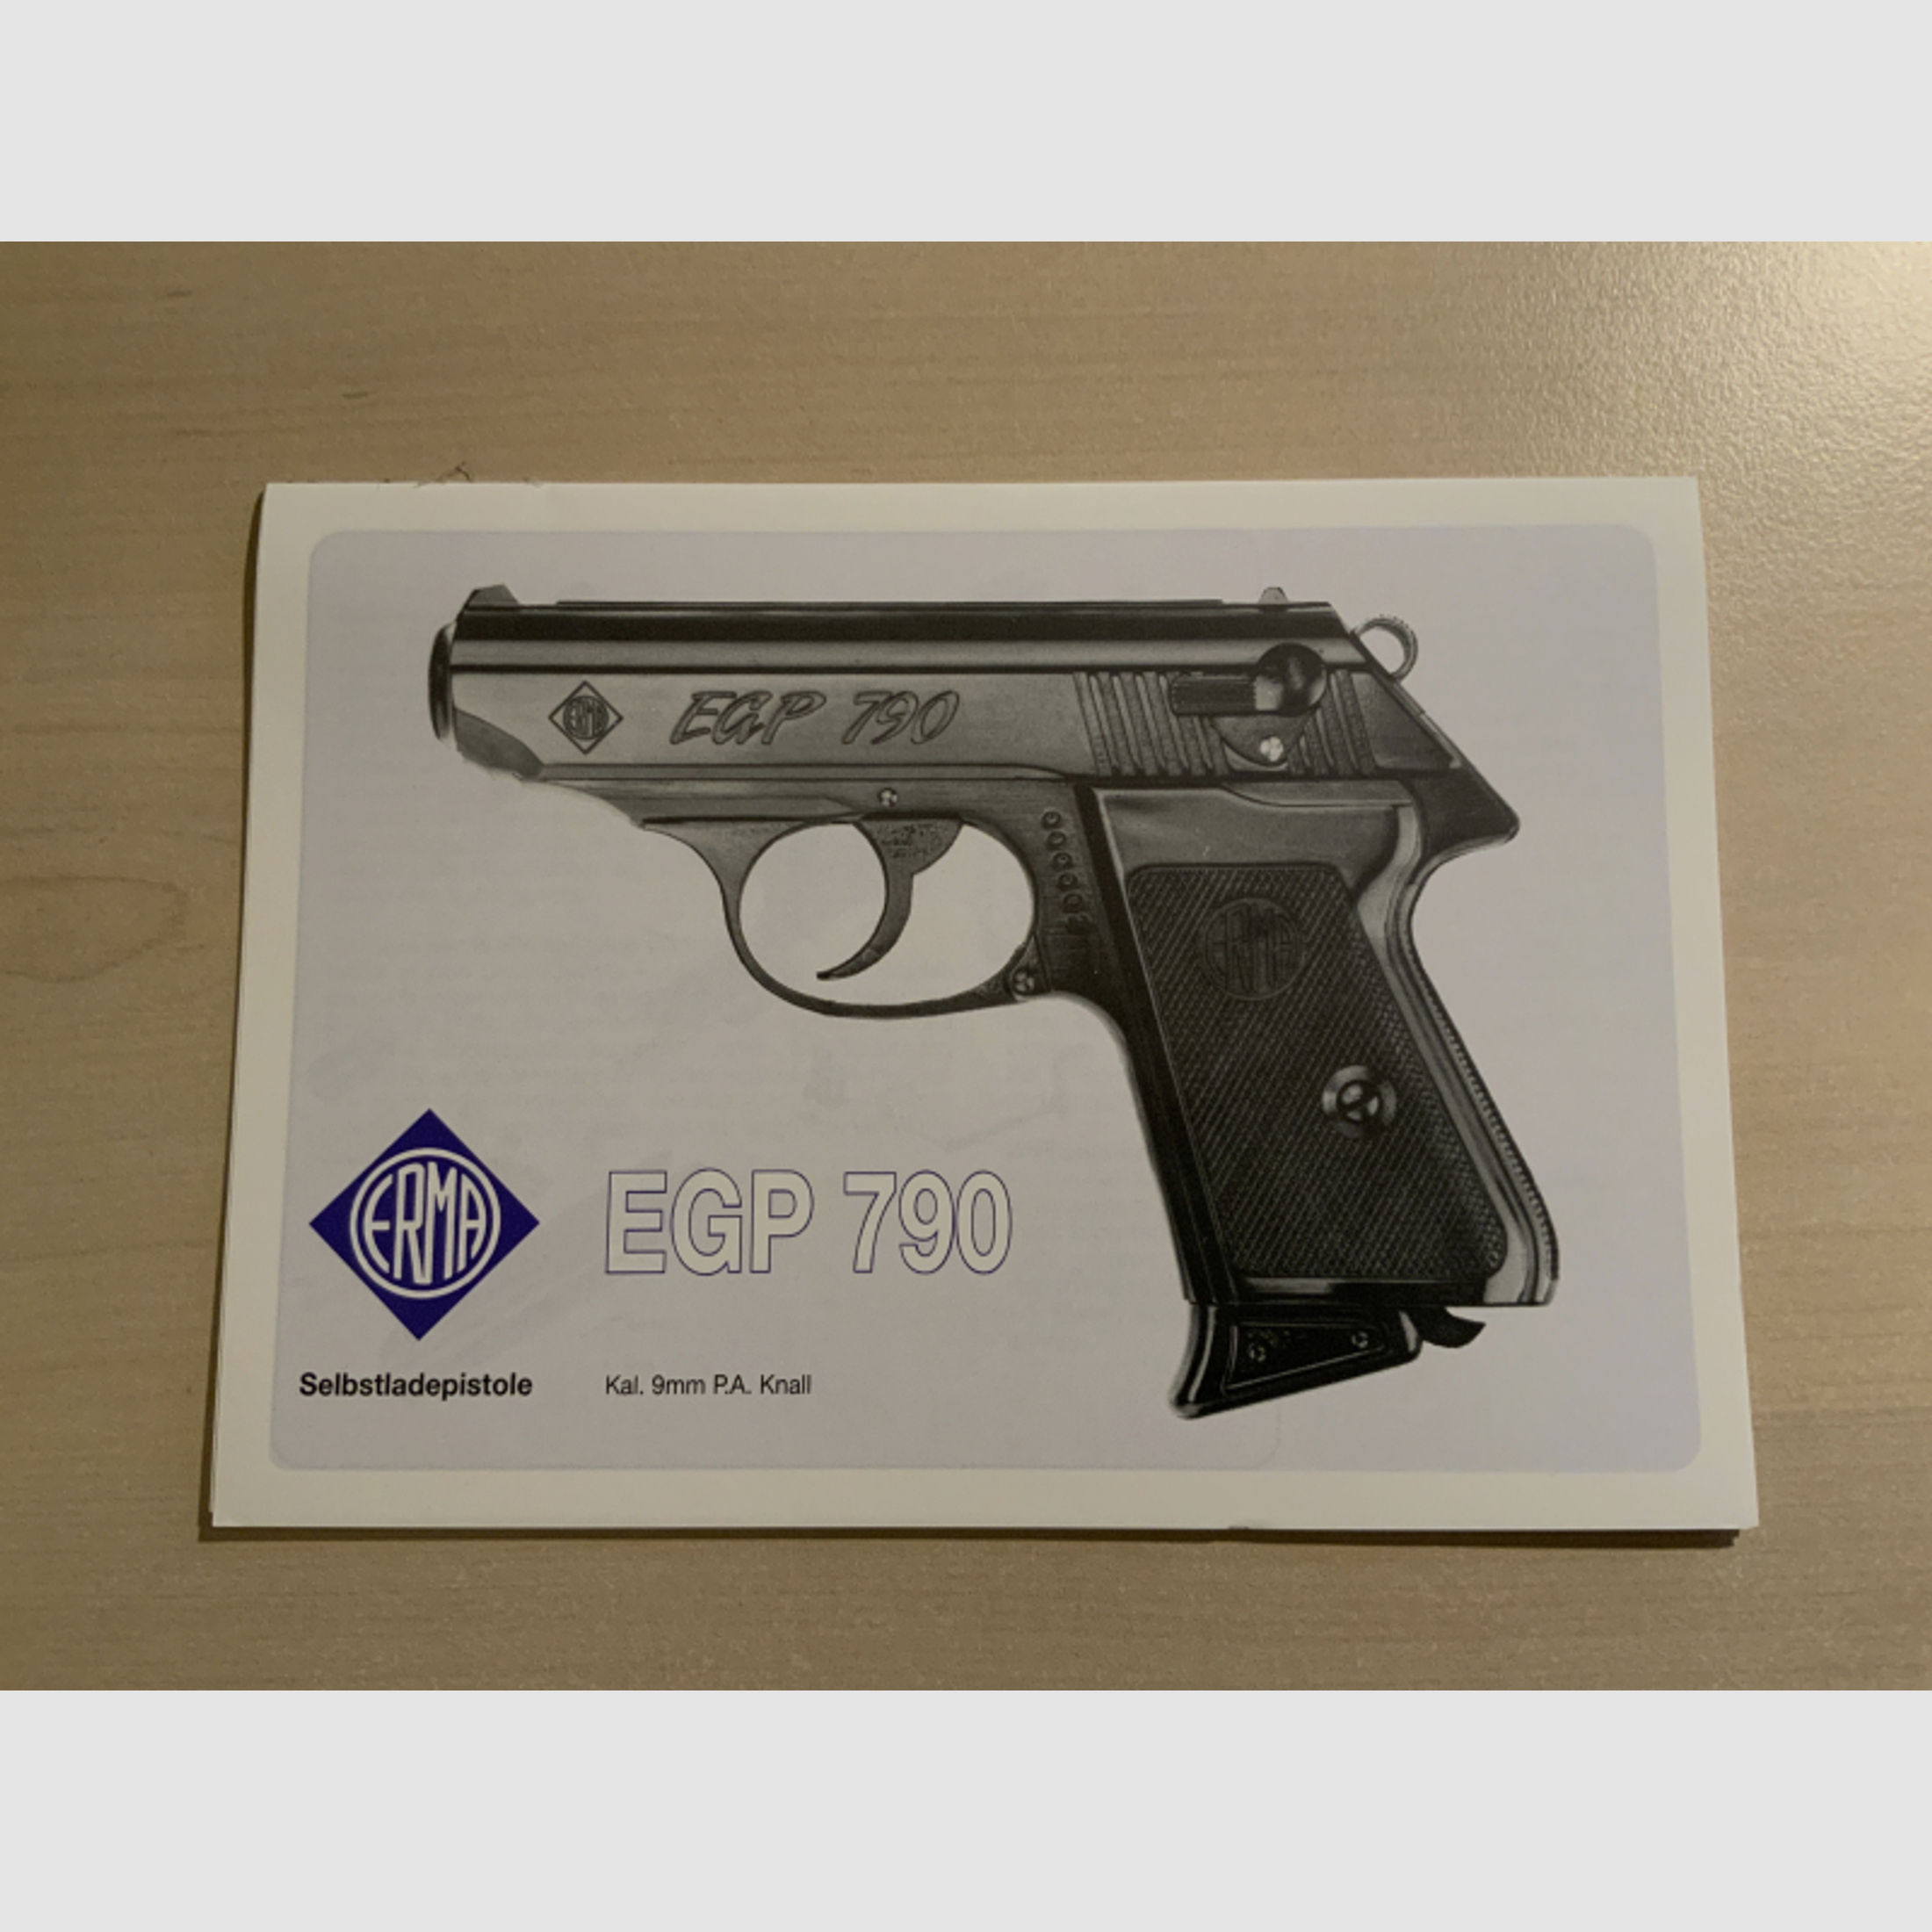 Bedienungsanleitung Pistole Erma EGP 790 - NEU